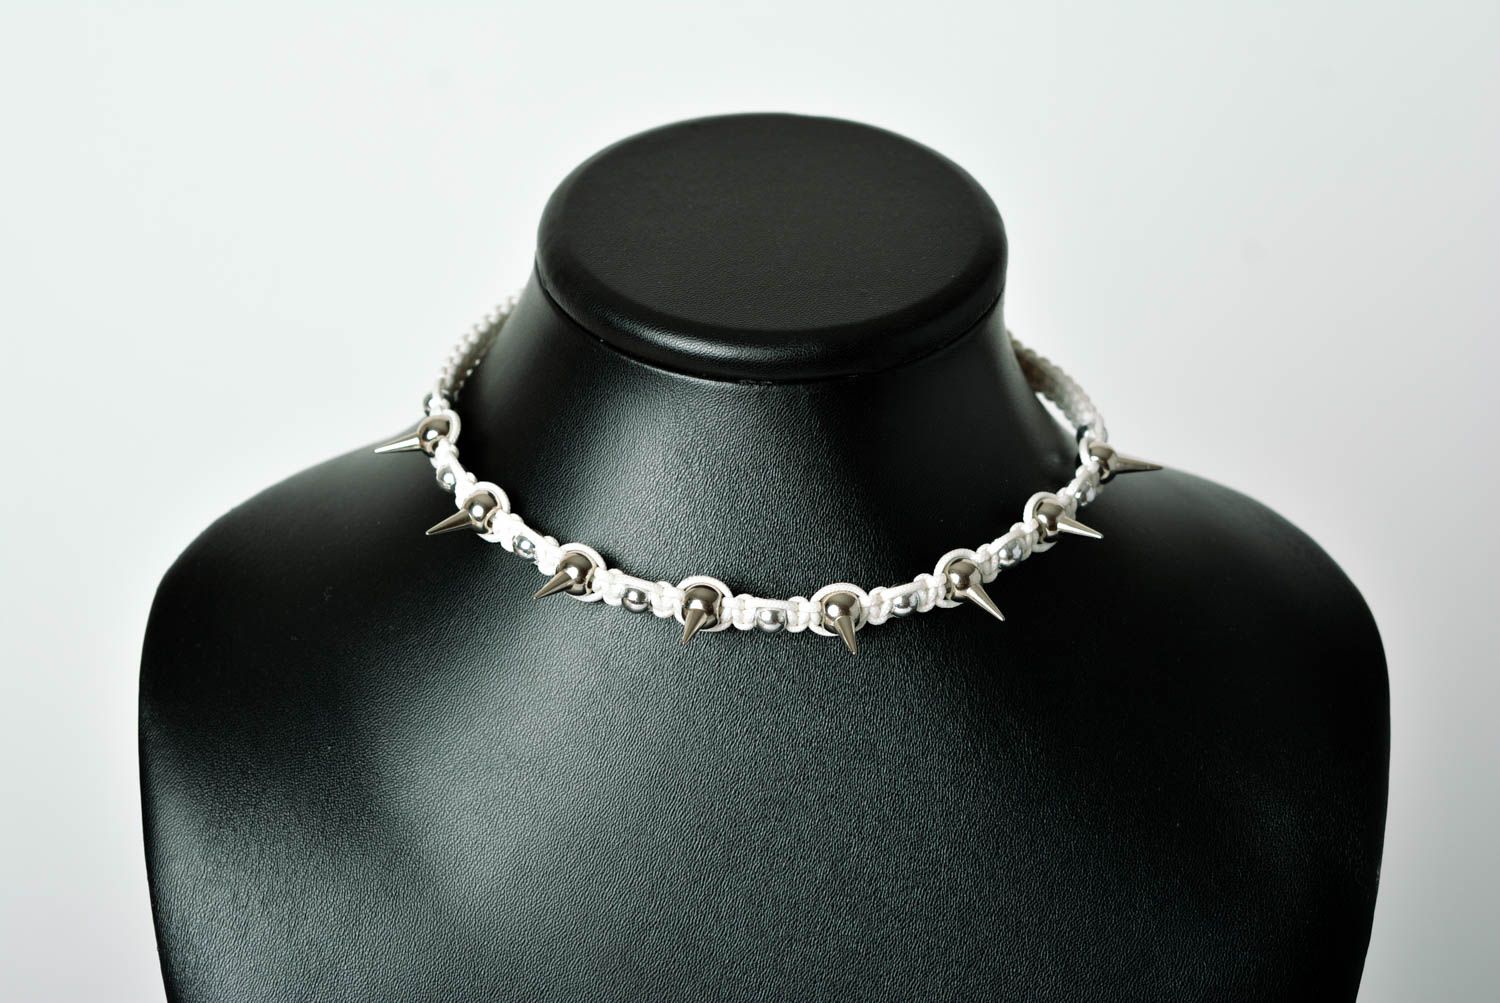 Spike necklace handmade necklace macrame necklace handmade designer jewelry  photo 2